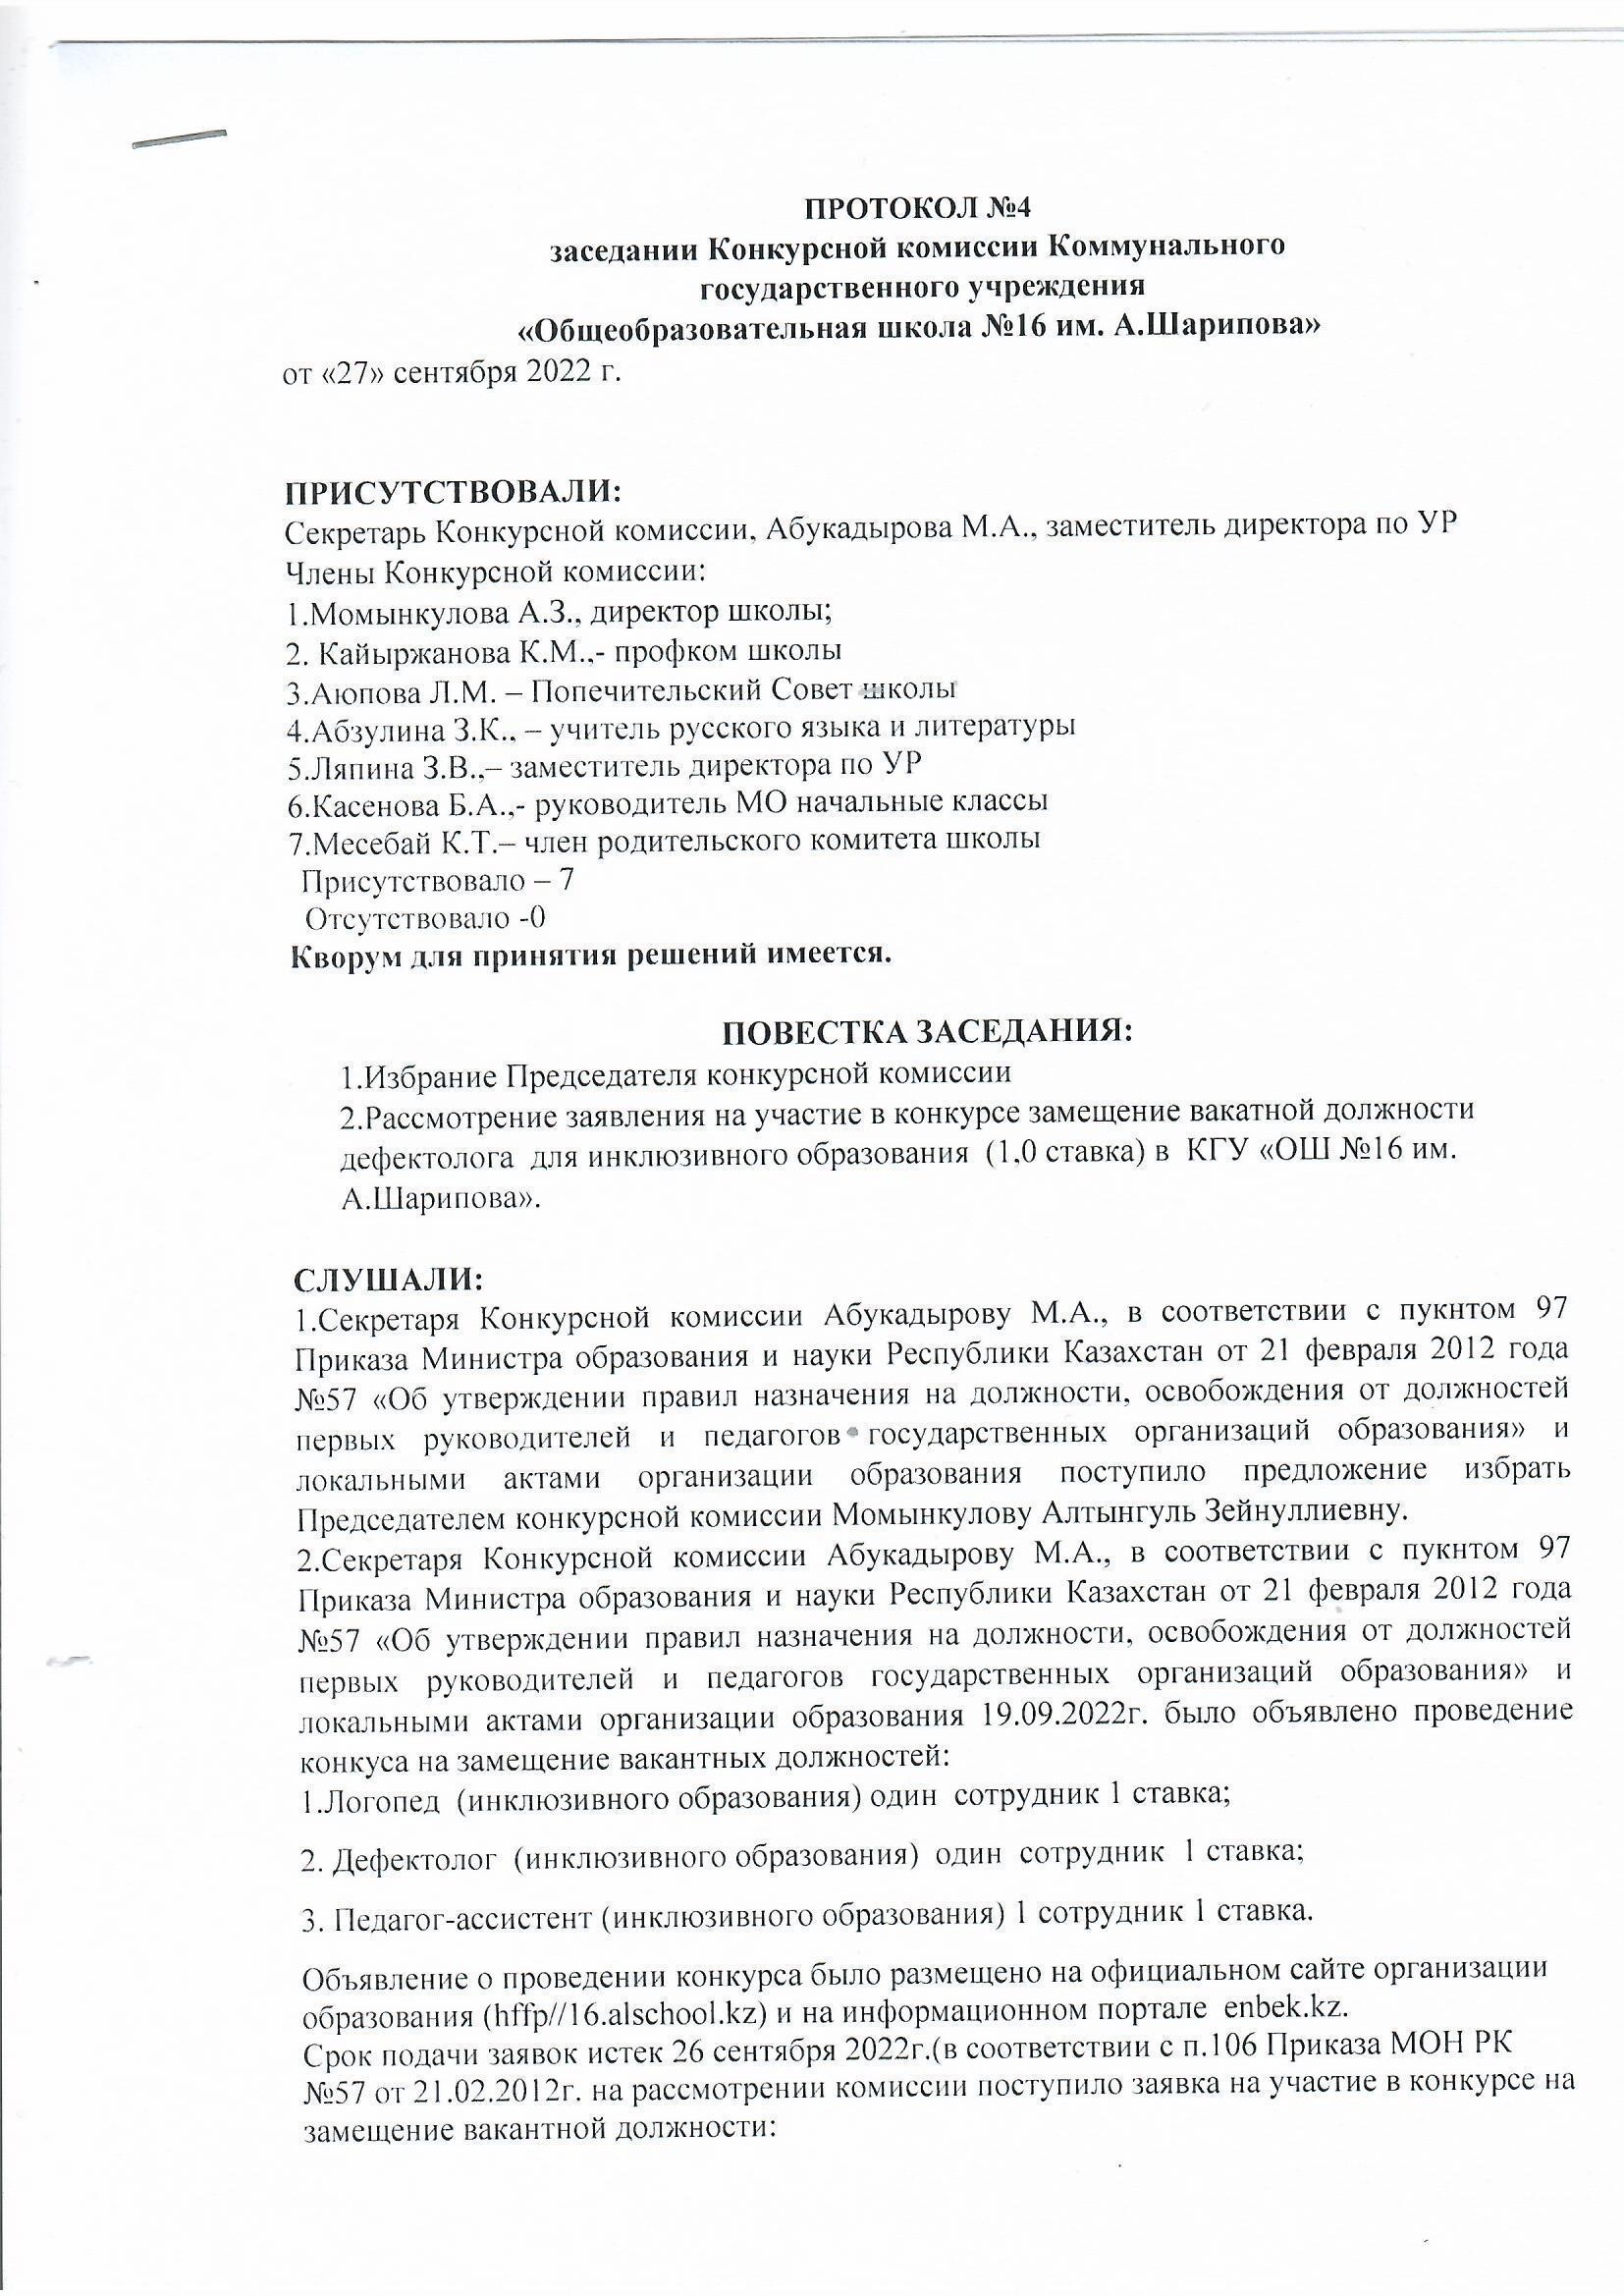 Протокол №4 заседании Конкурсной комиссии КГУ ОШ №16 им.А.Шарипова.